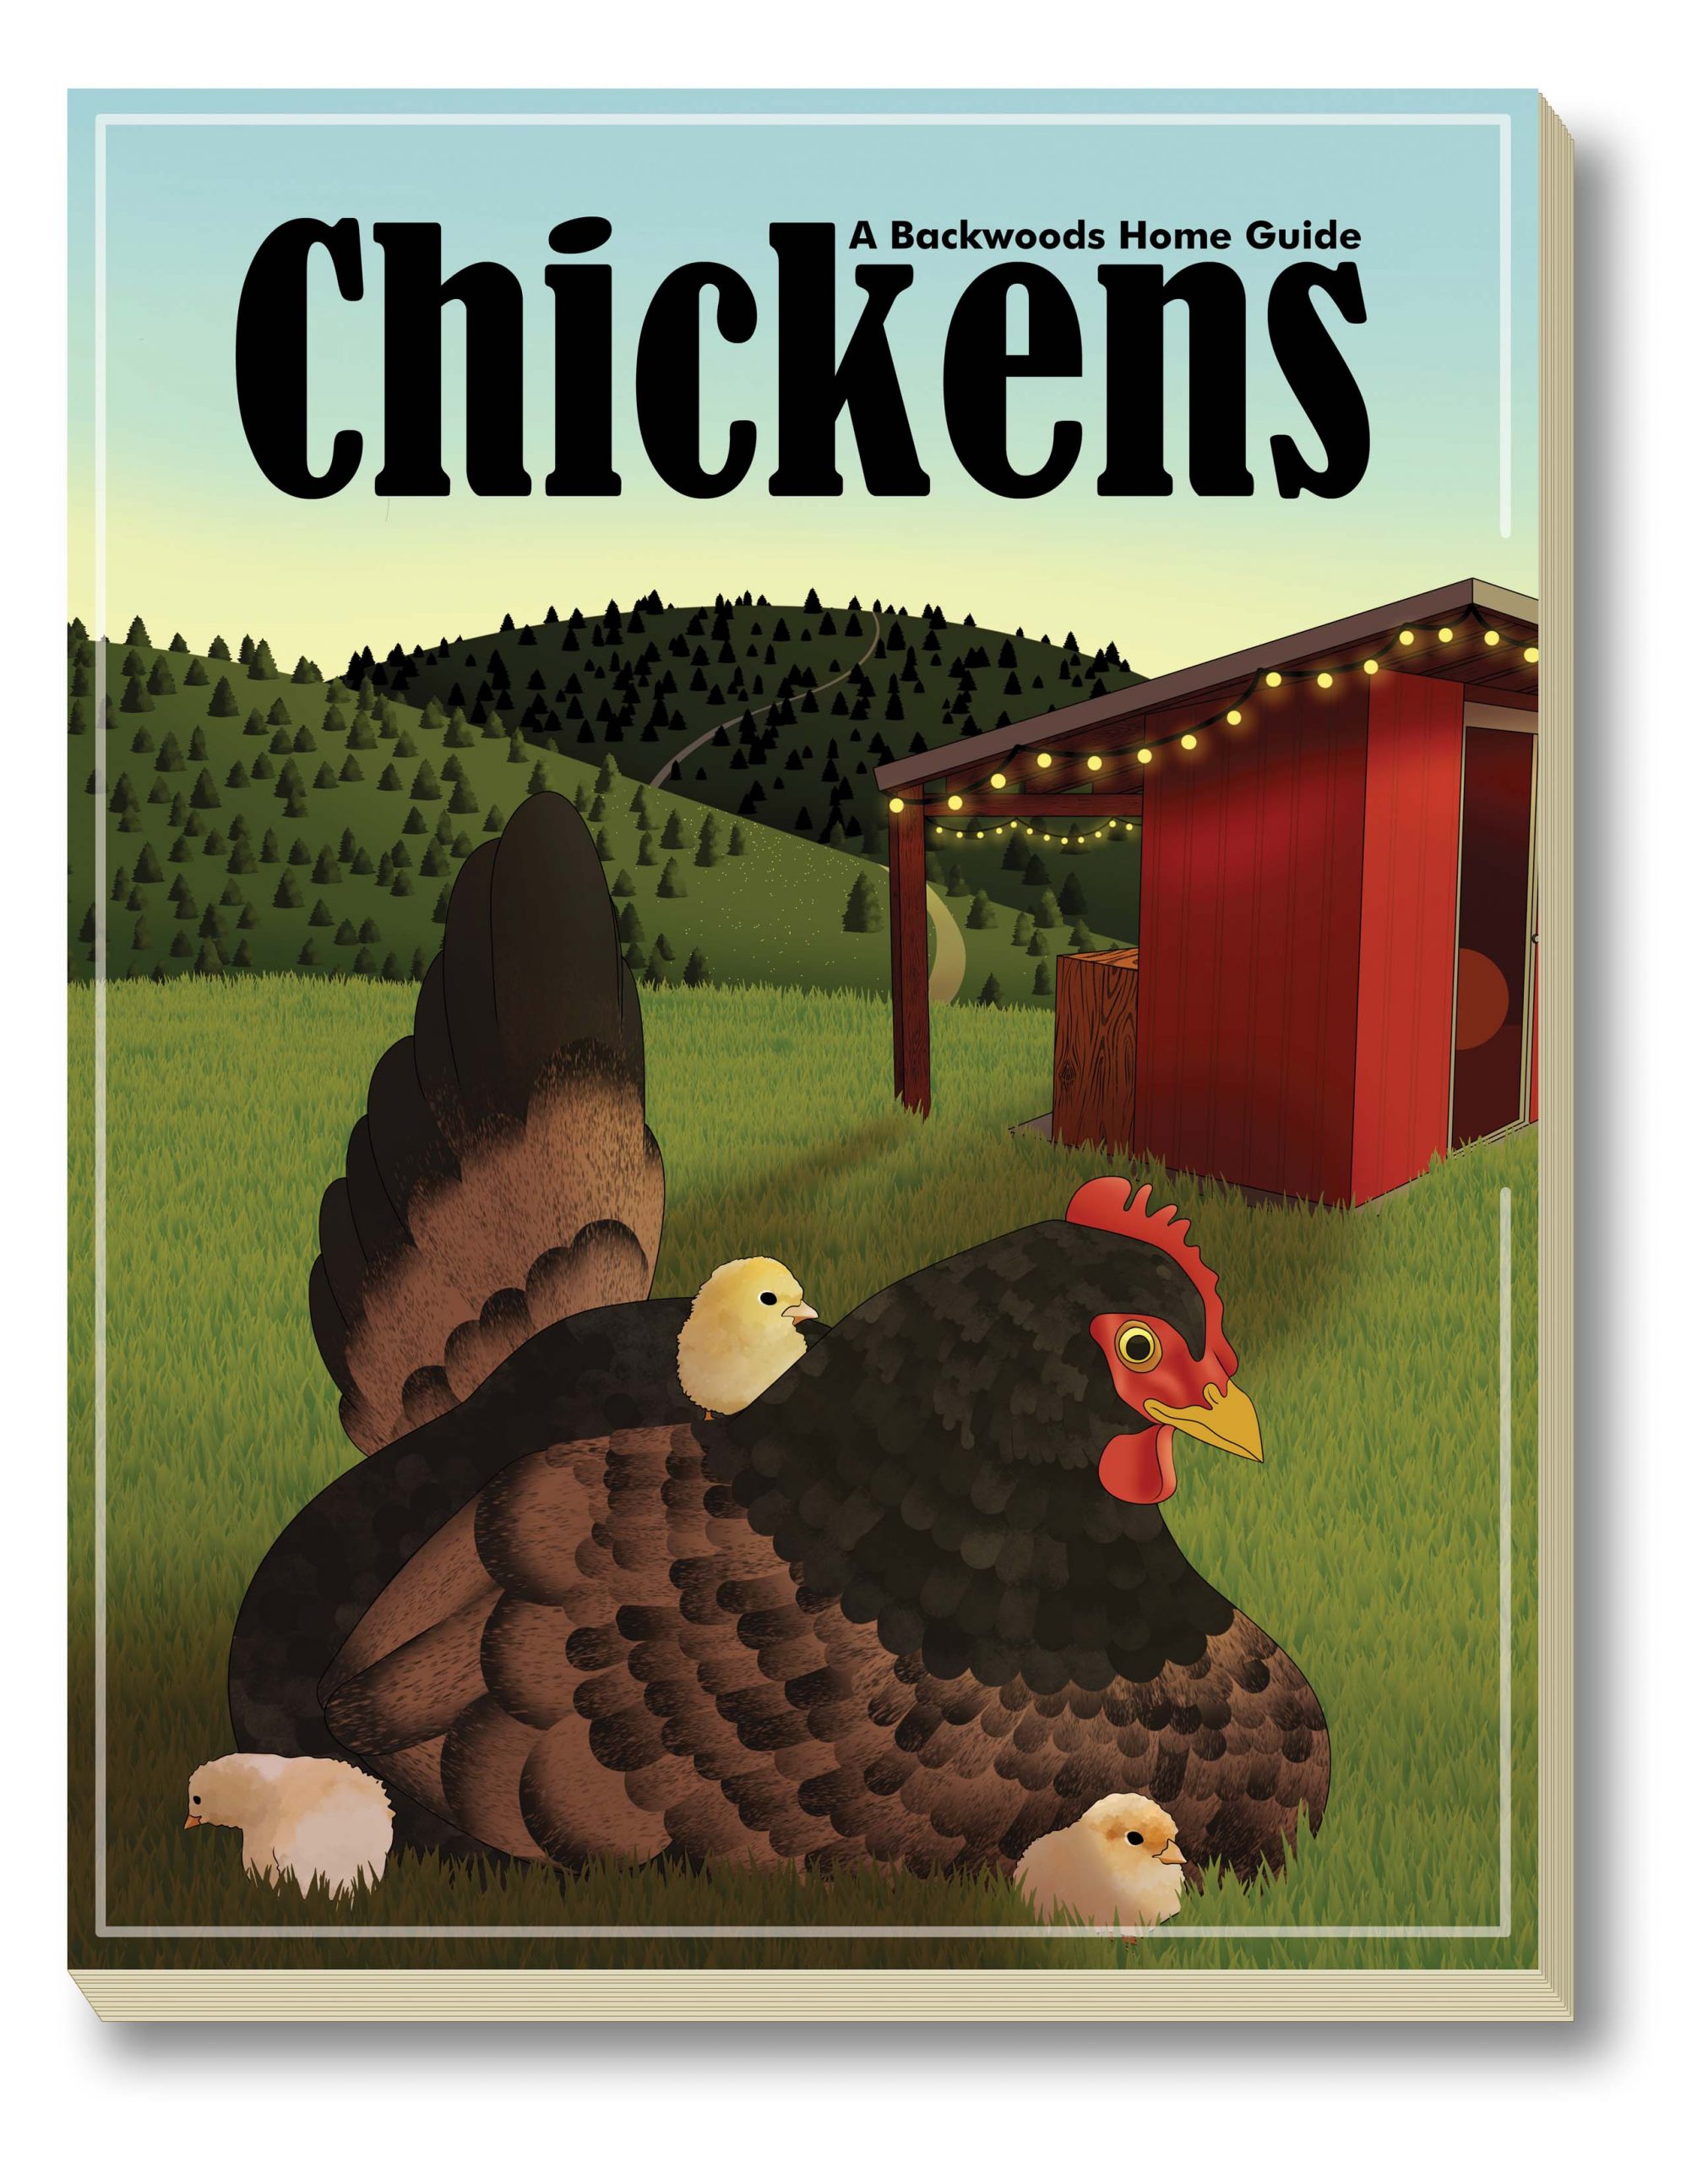 https://www.backwoodshome.com/shop/wp-content/uploads/2020/09/Chicken-book-with-depth-scaled.jpg